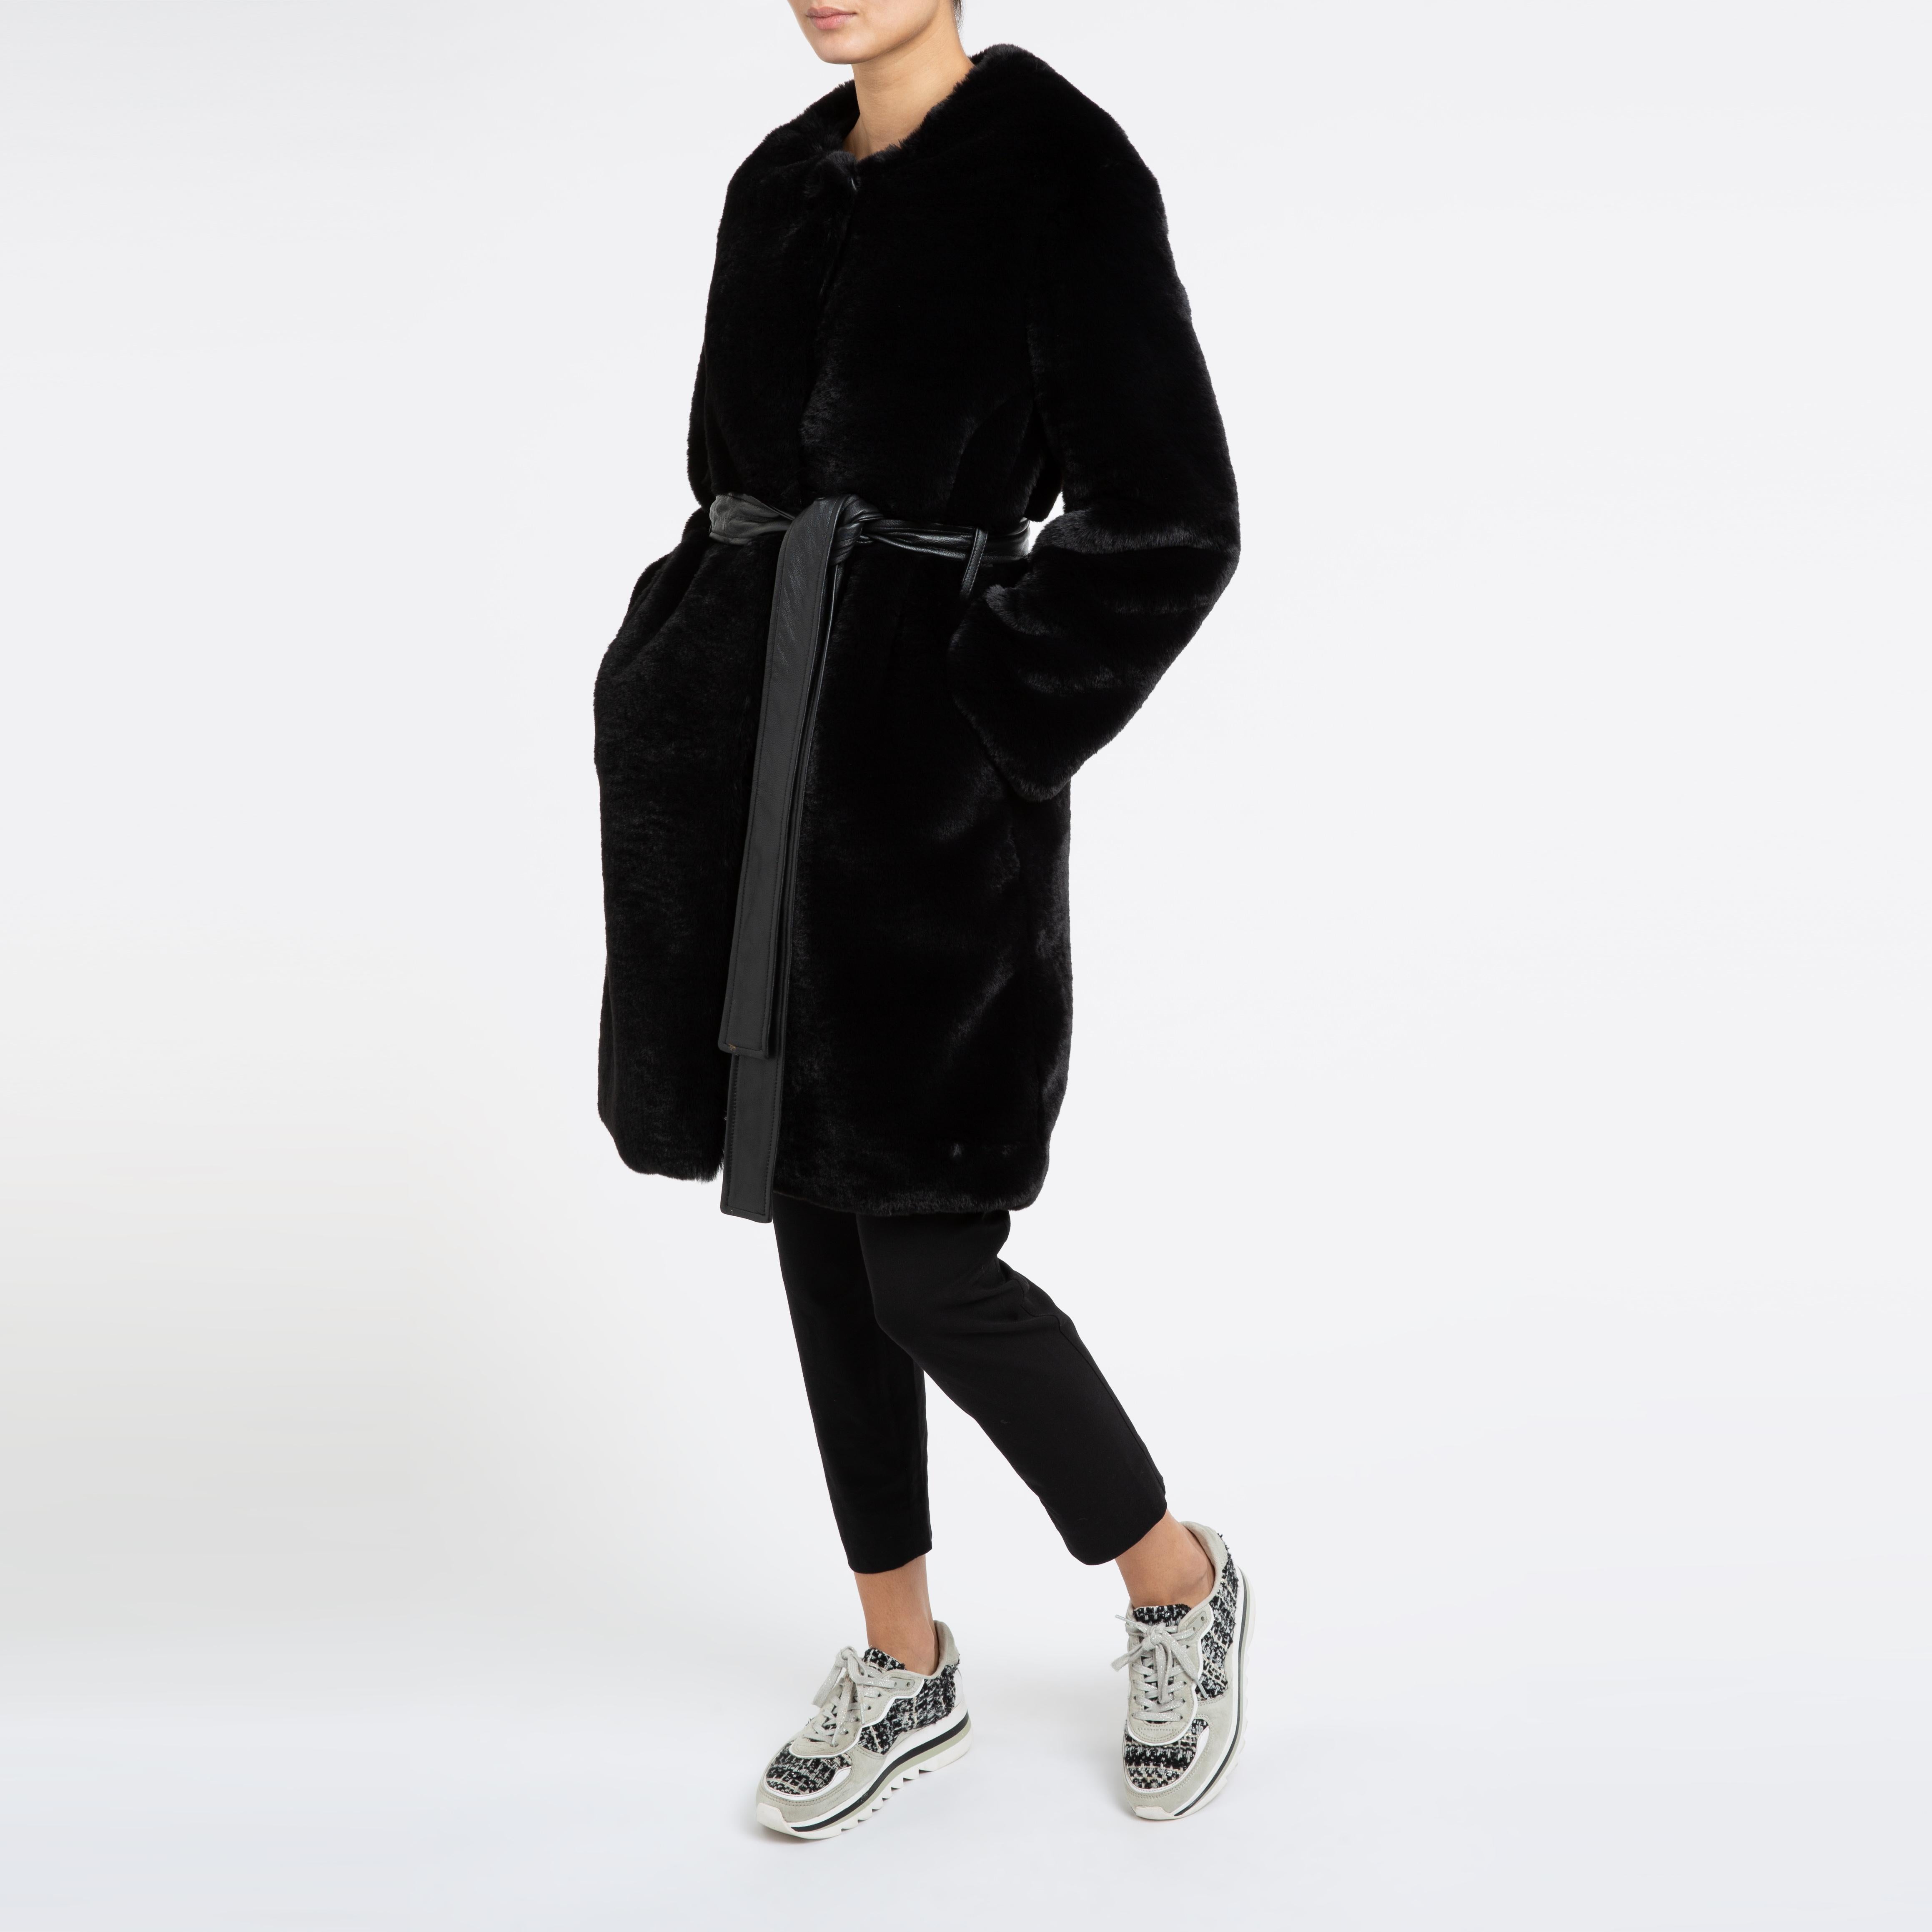 Verheyen London Serena  Collarless Faux Fur Coat in Black - Size uk 10 7